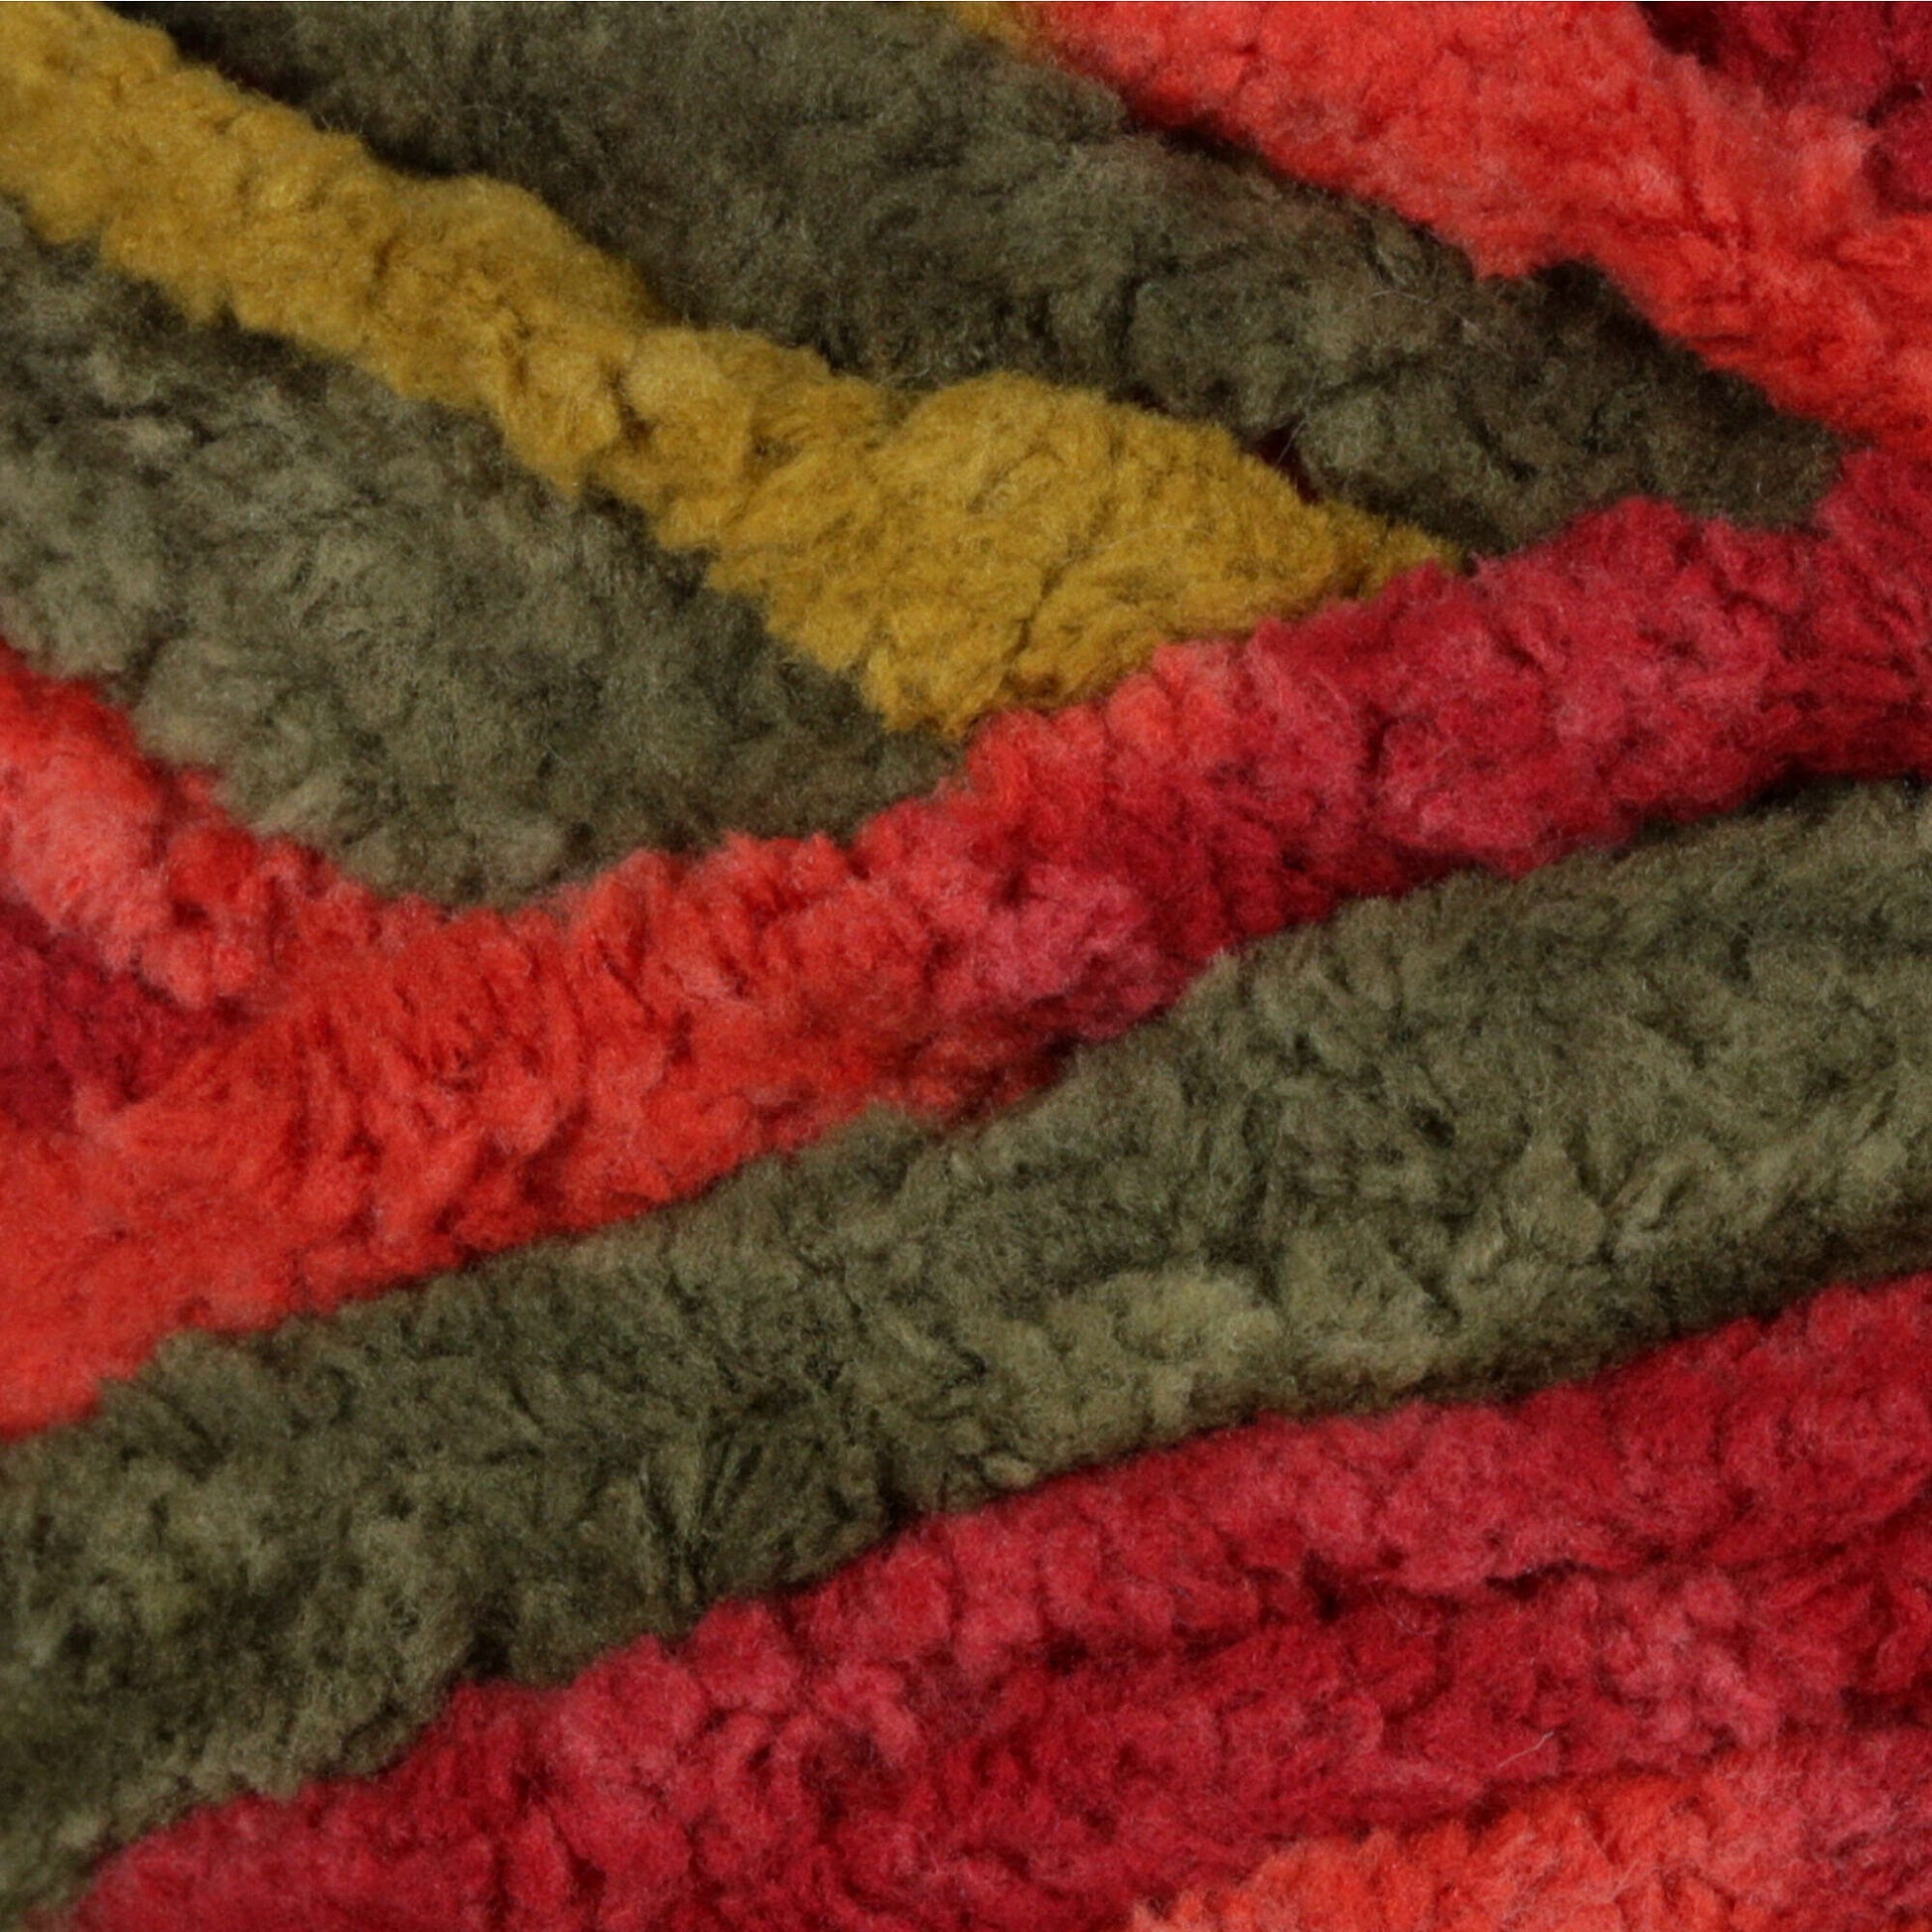 Bernat Blanket Yarn